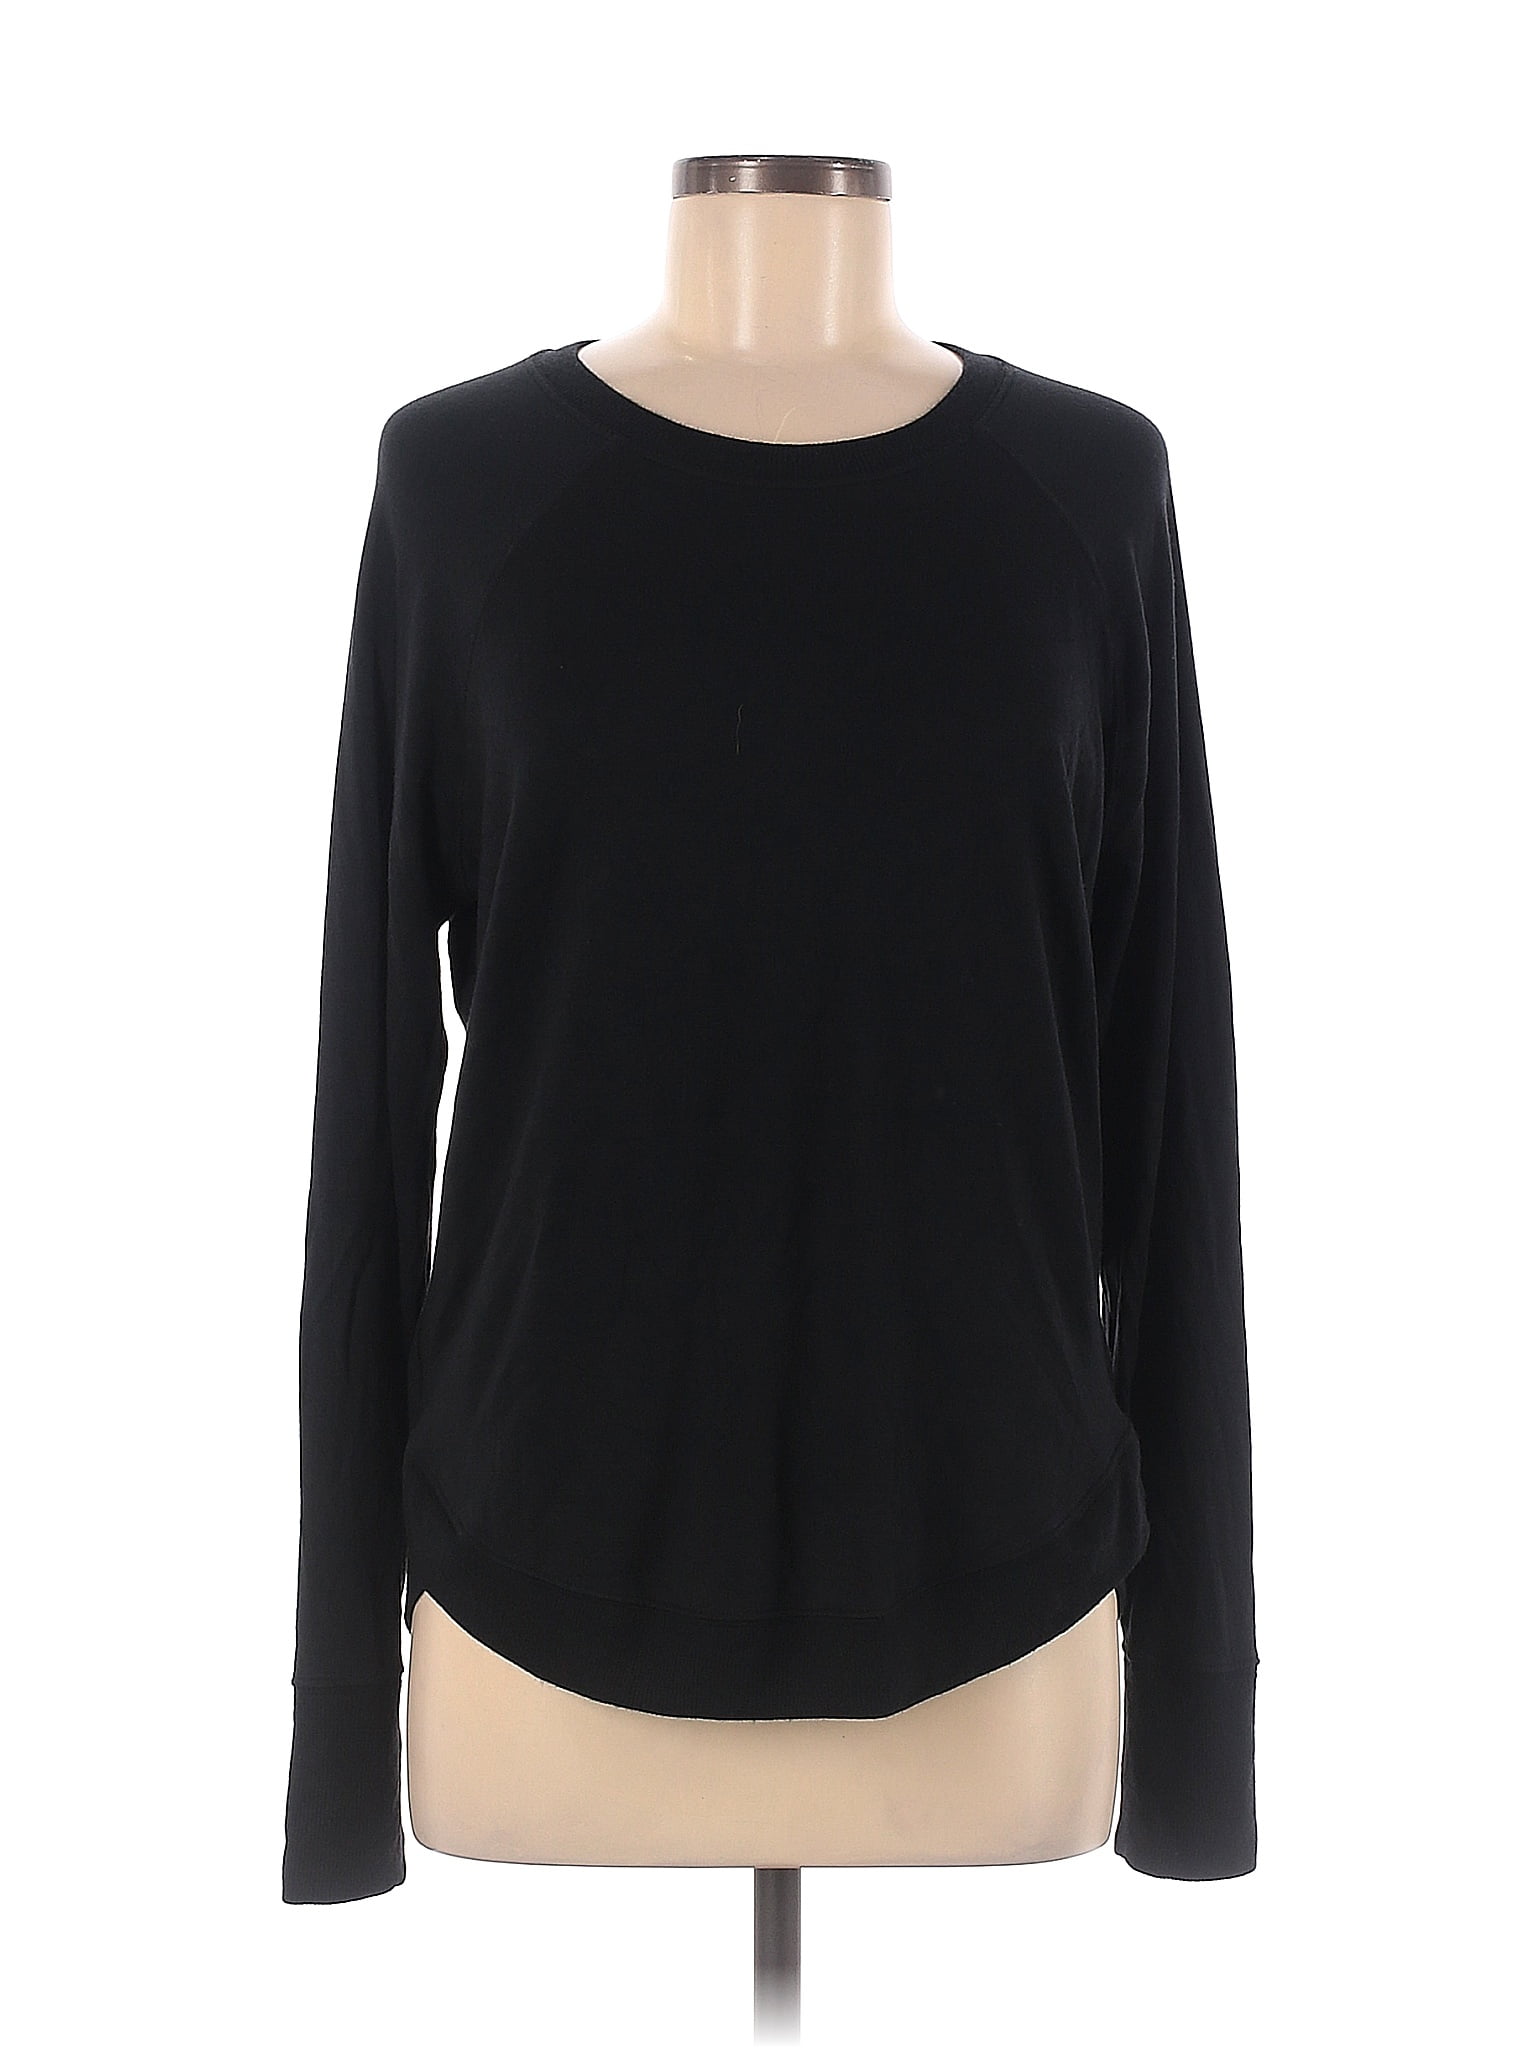 Athleta Color Block Solid Black Pullover Sweater Size M - 64% off | ThredUp